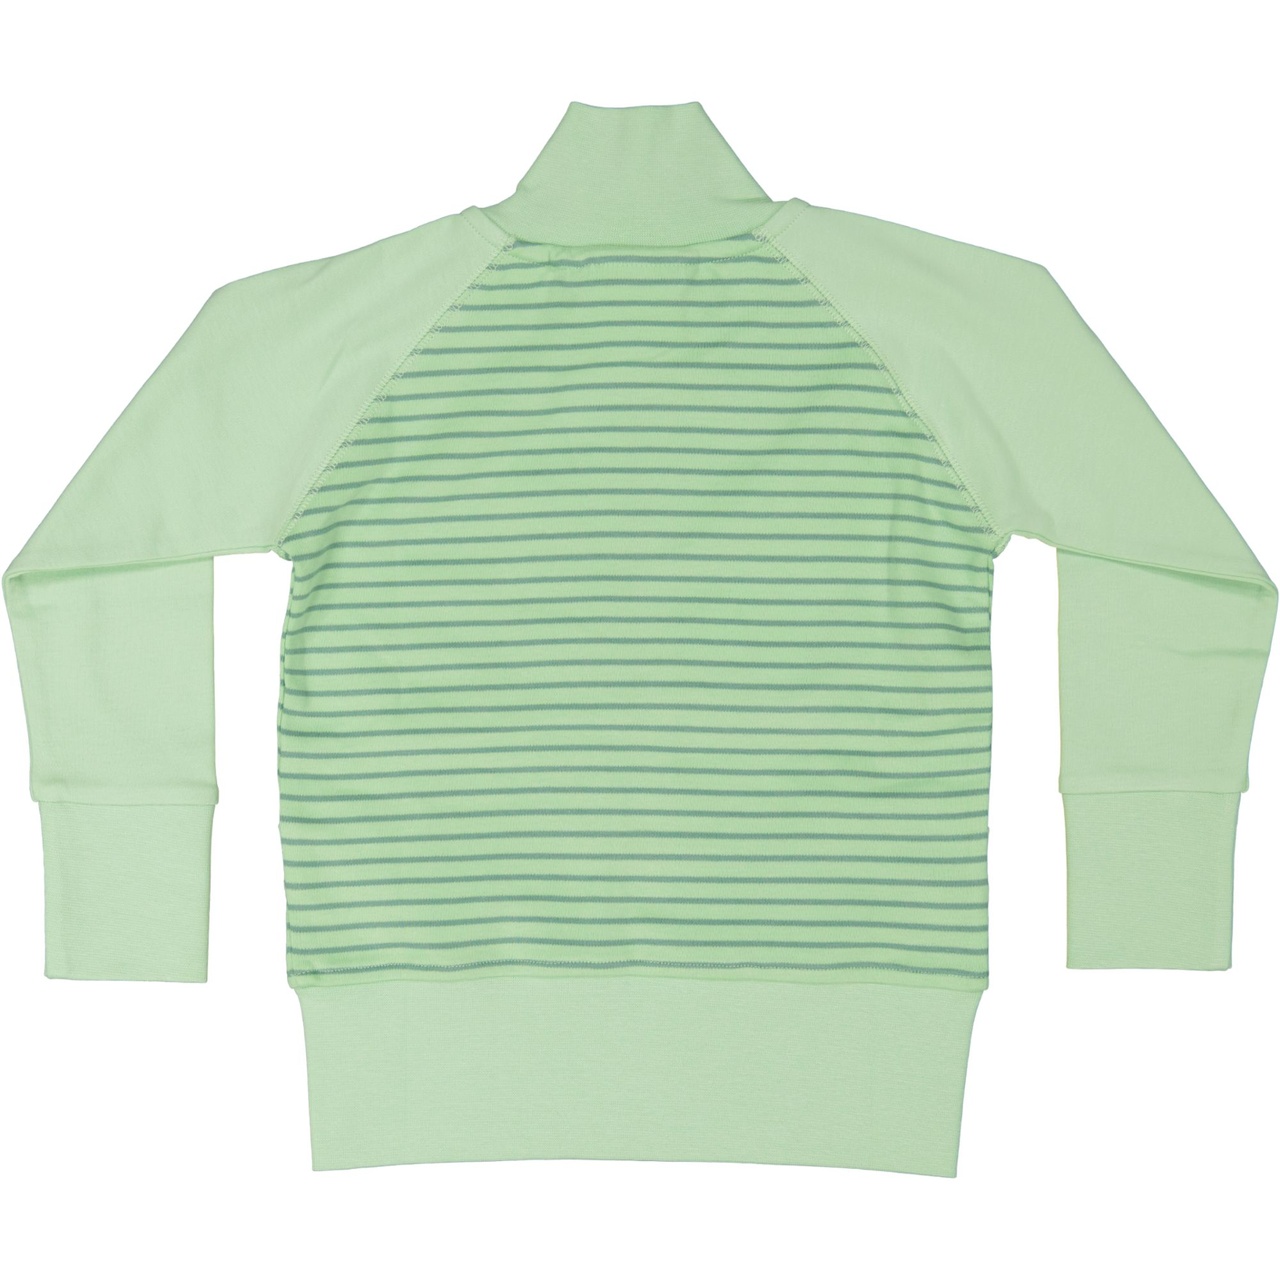 Zip sweater L.green/green